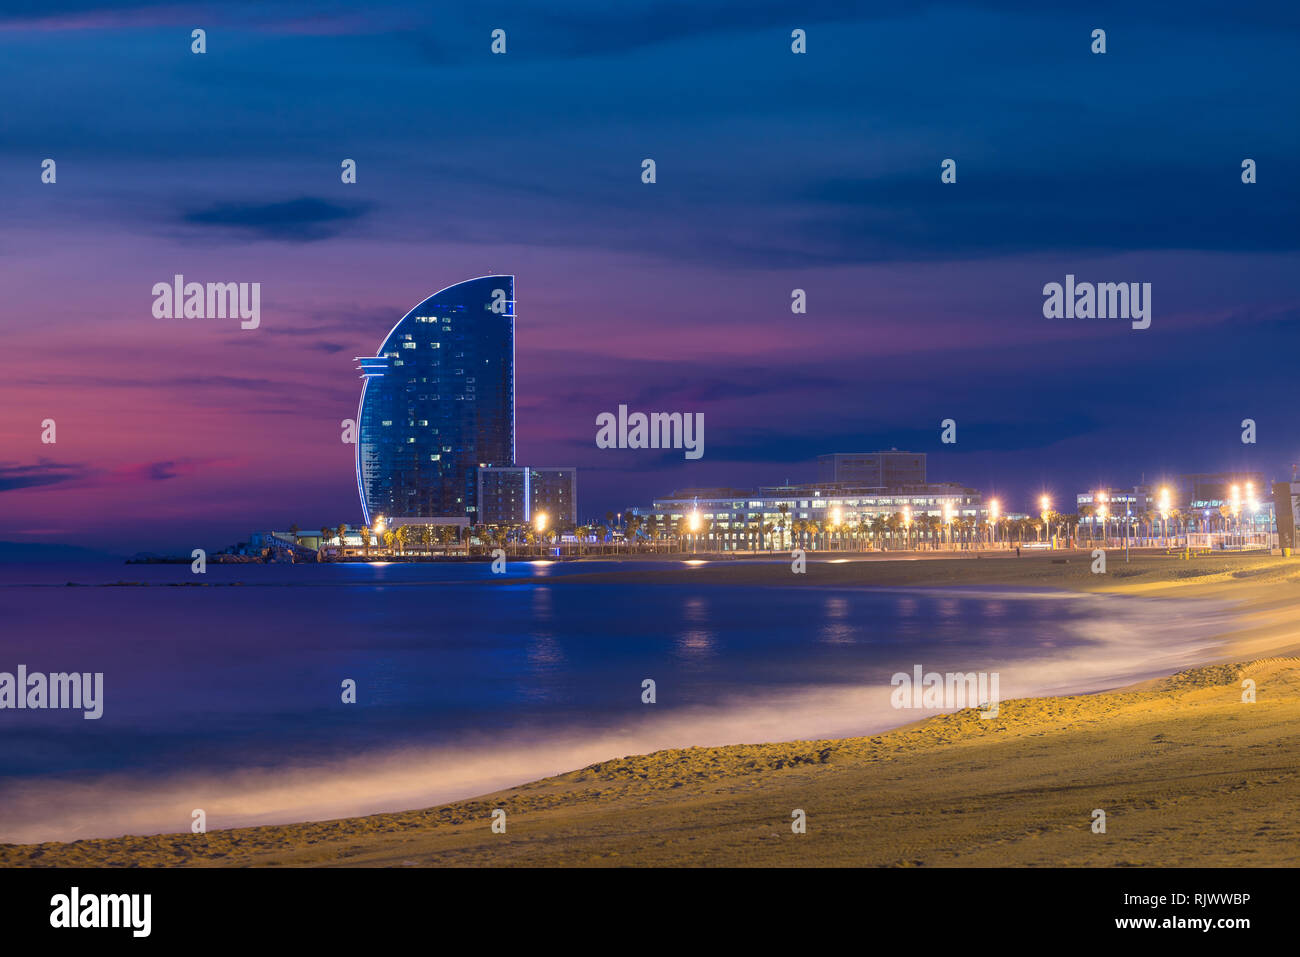 Barcelona Strand im Sommer Nacht entlang der Küste in Barcelona, Spanien. Mittelmeer in Spanien. Stockfoto